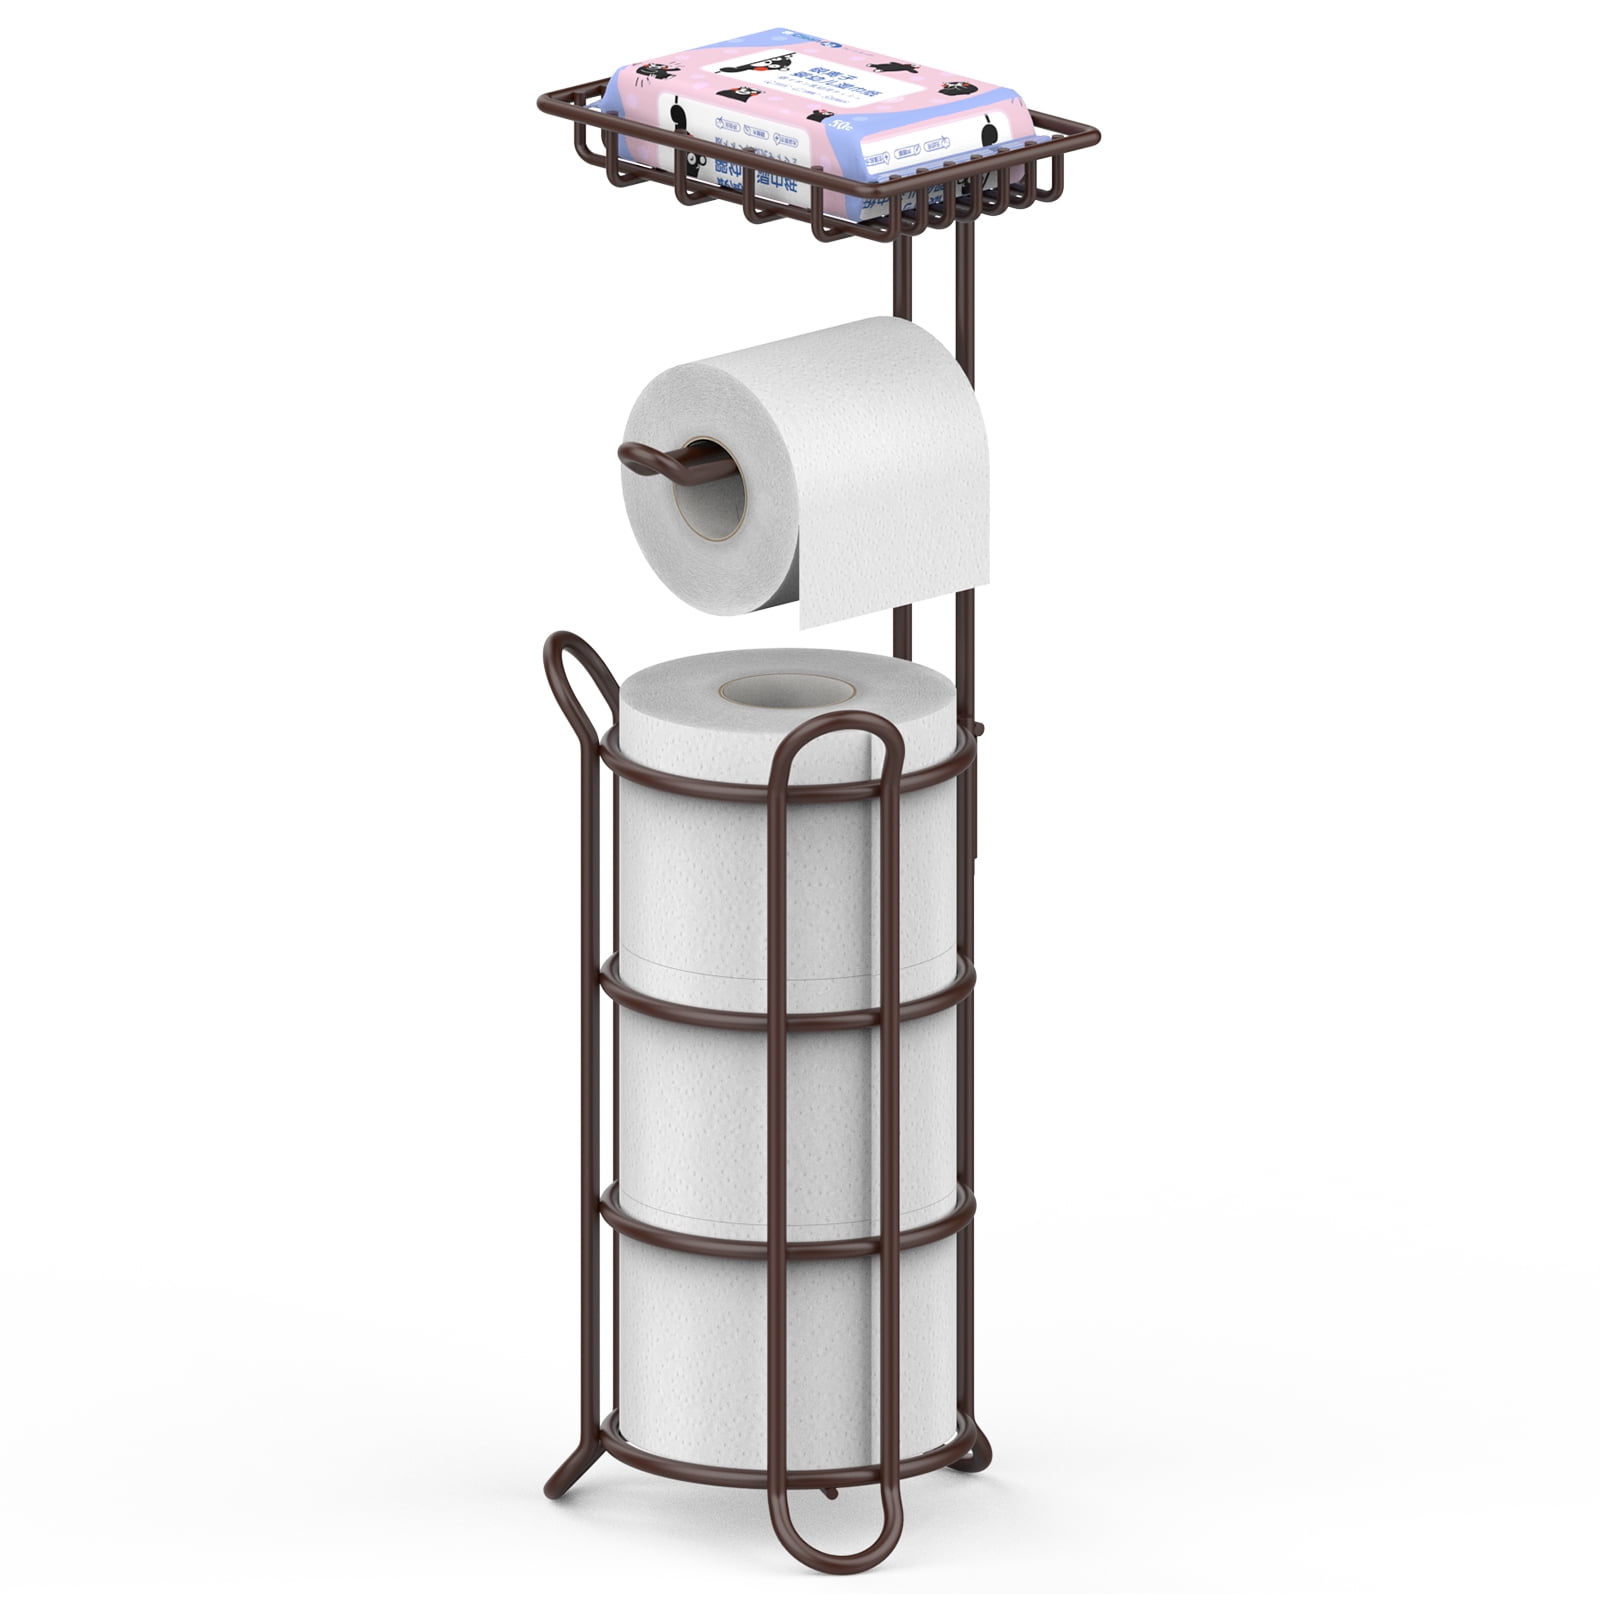 Heioov upgraded toilet paper holder stand for bathroom, holds 3 big rolls  of jumbo mega paper